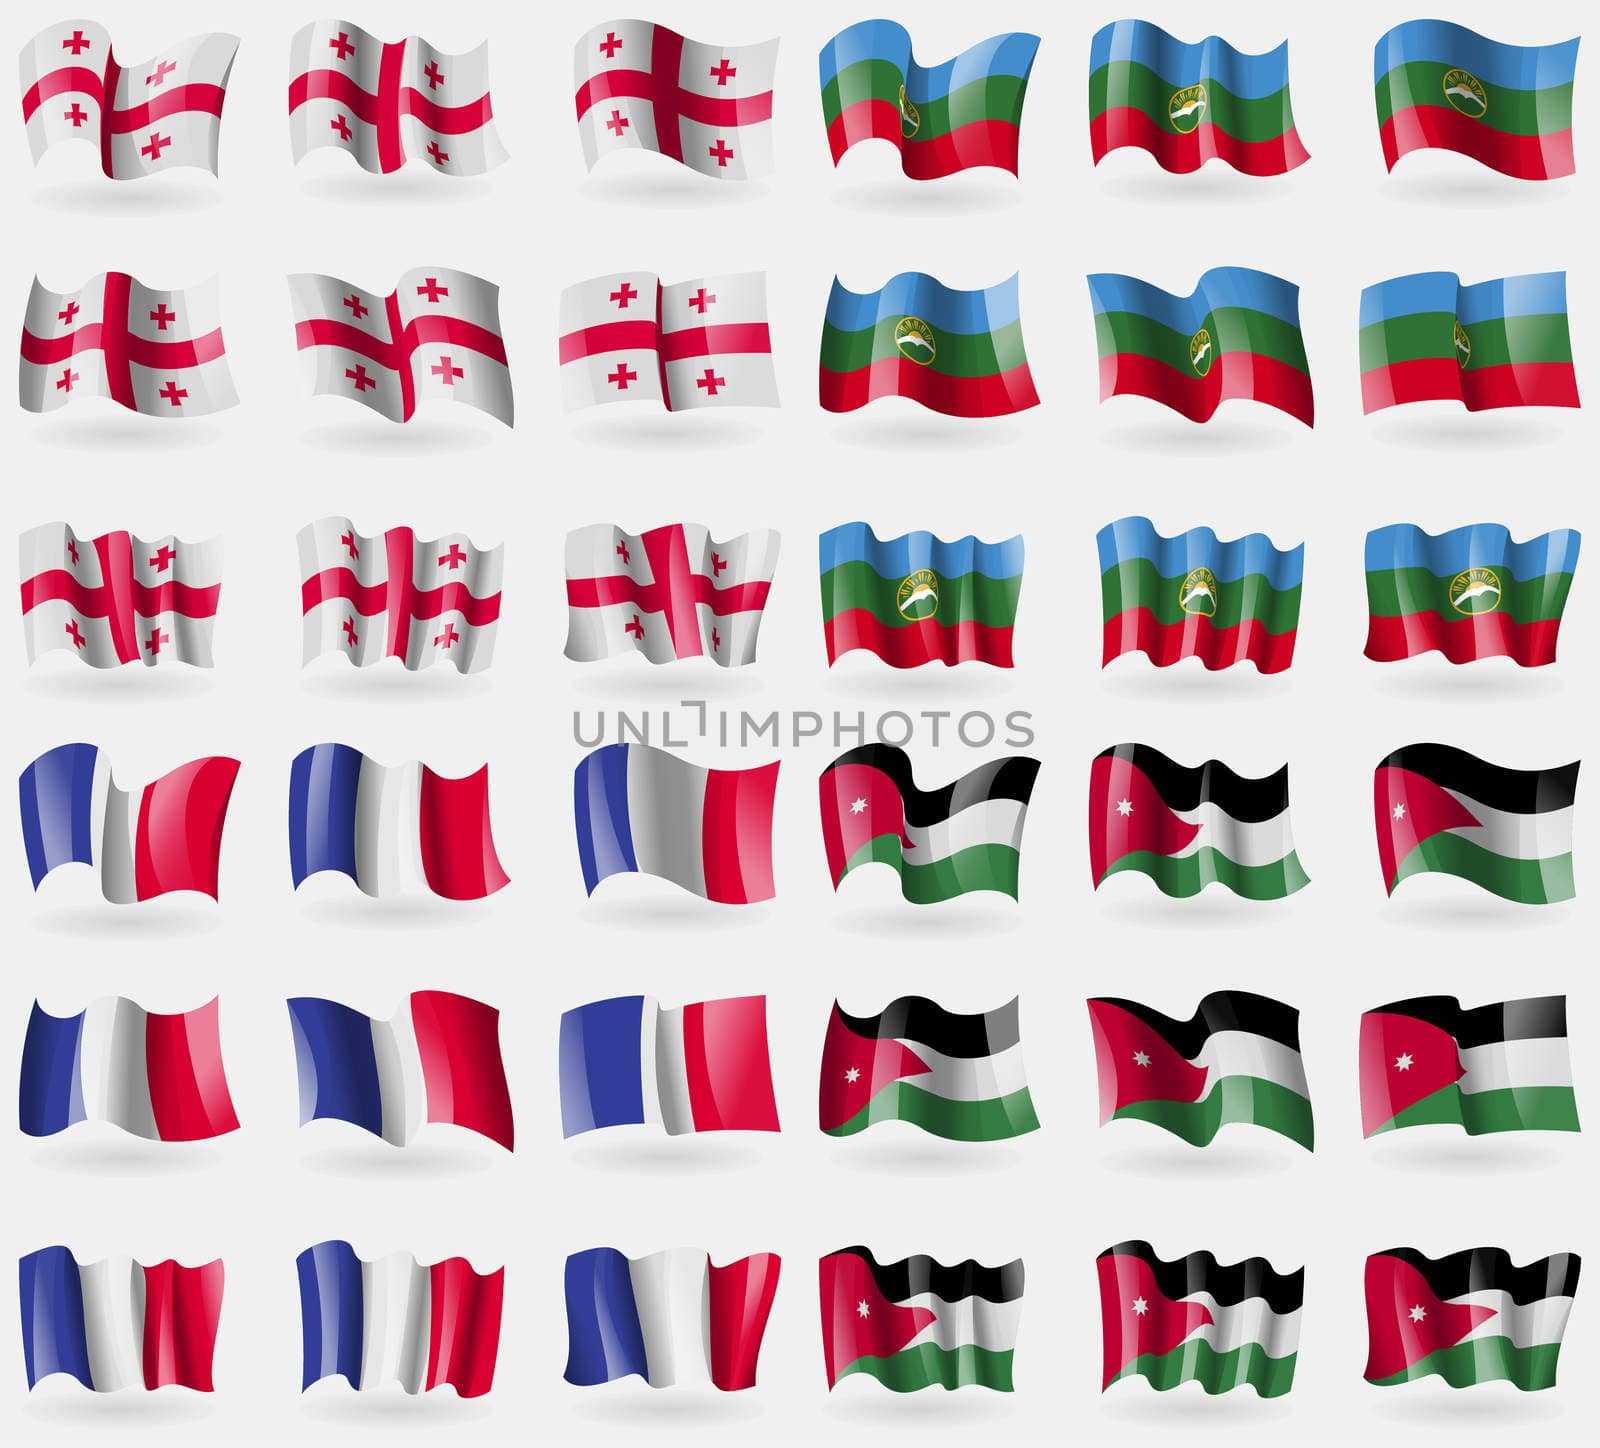 Georgia, KarachayCherkessia, Frence, Jordan. Set of 36 flags of the countries of the world. illustration